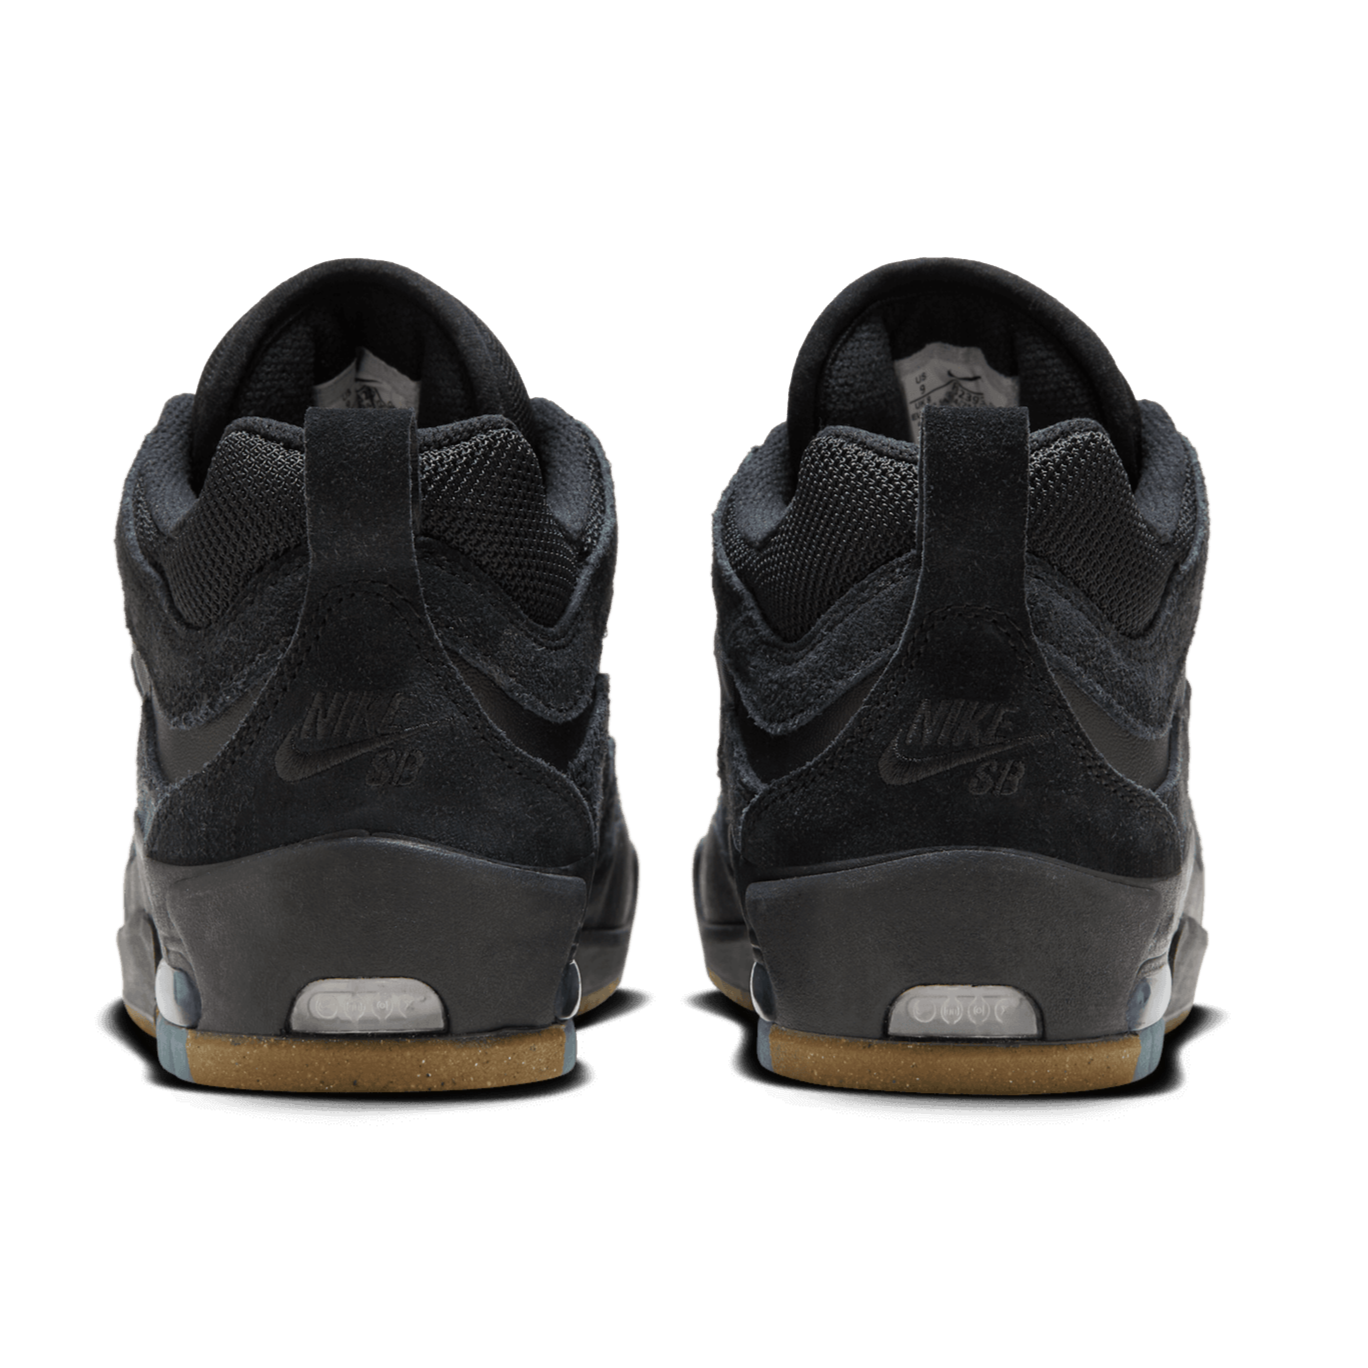 Black/Black Ishod Wair Max 2 Nike SB Shoe Back